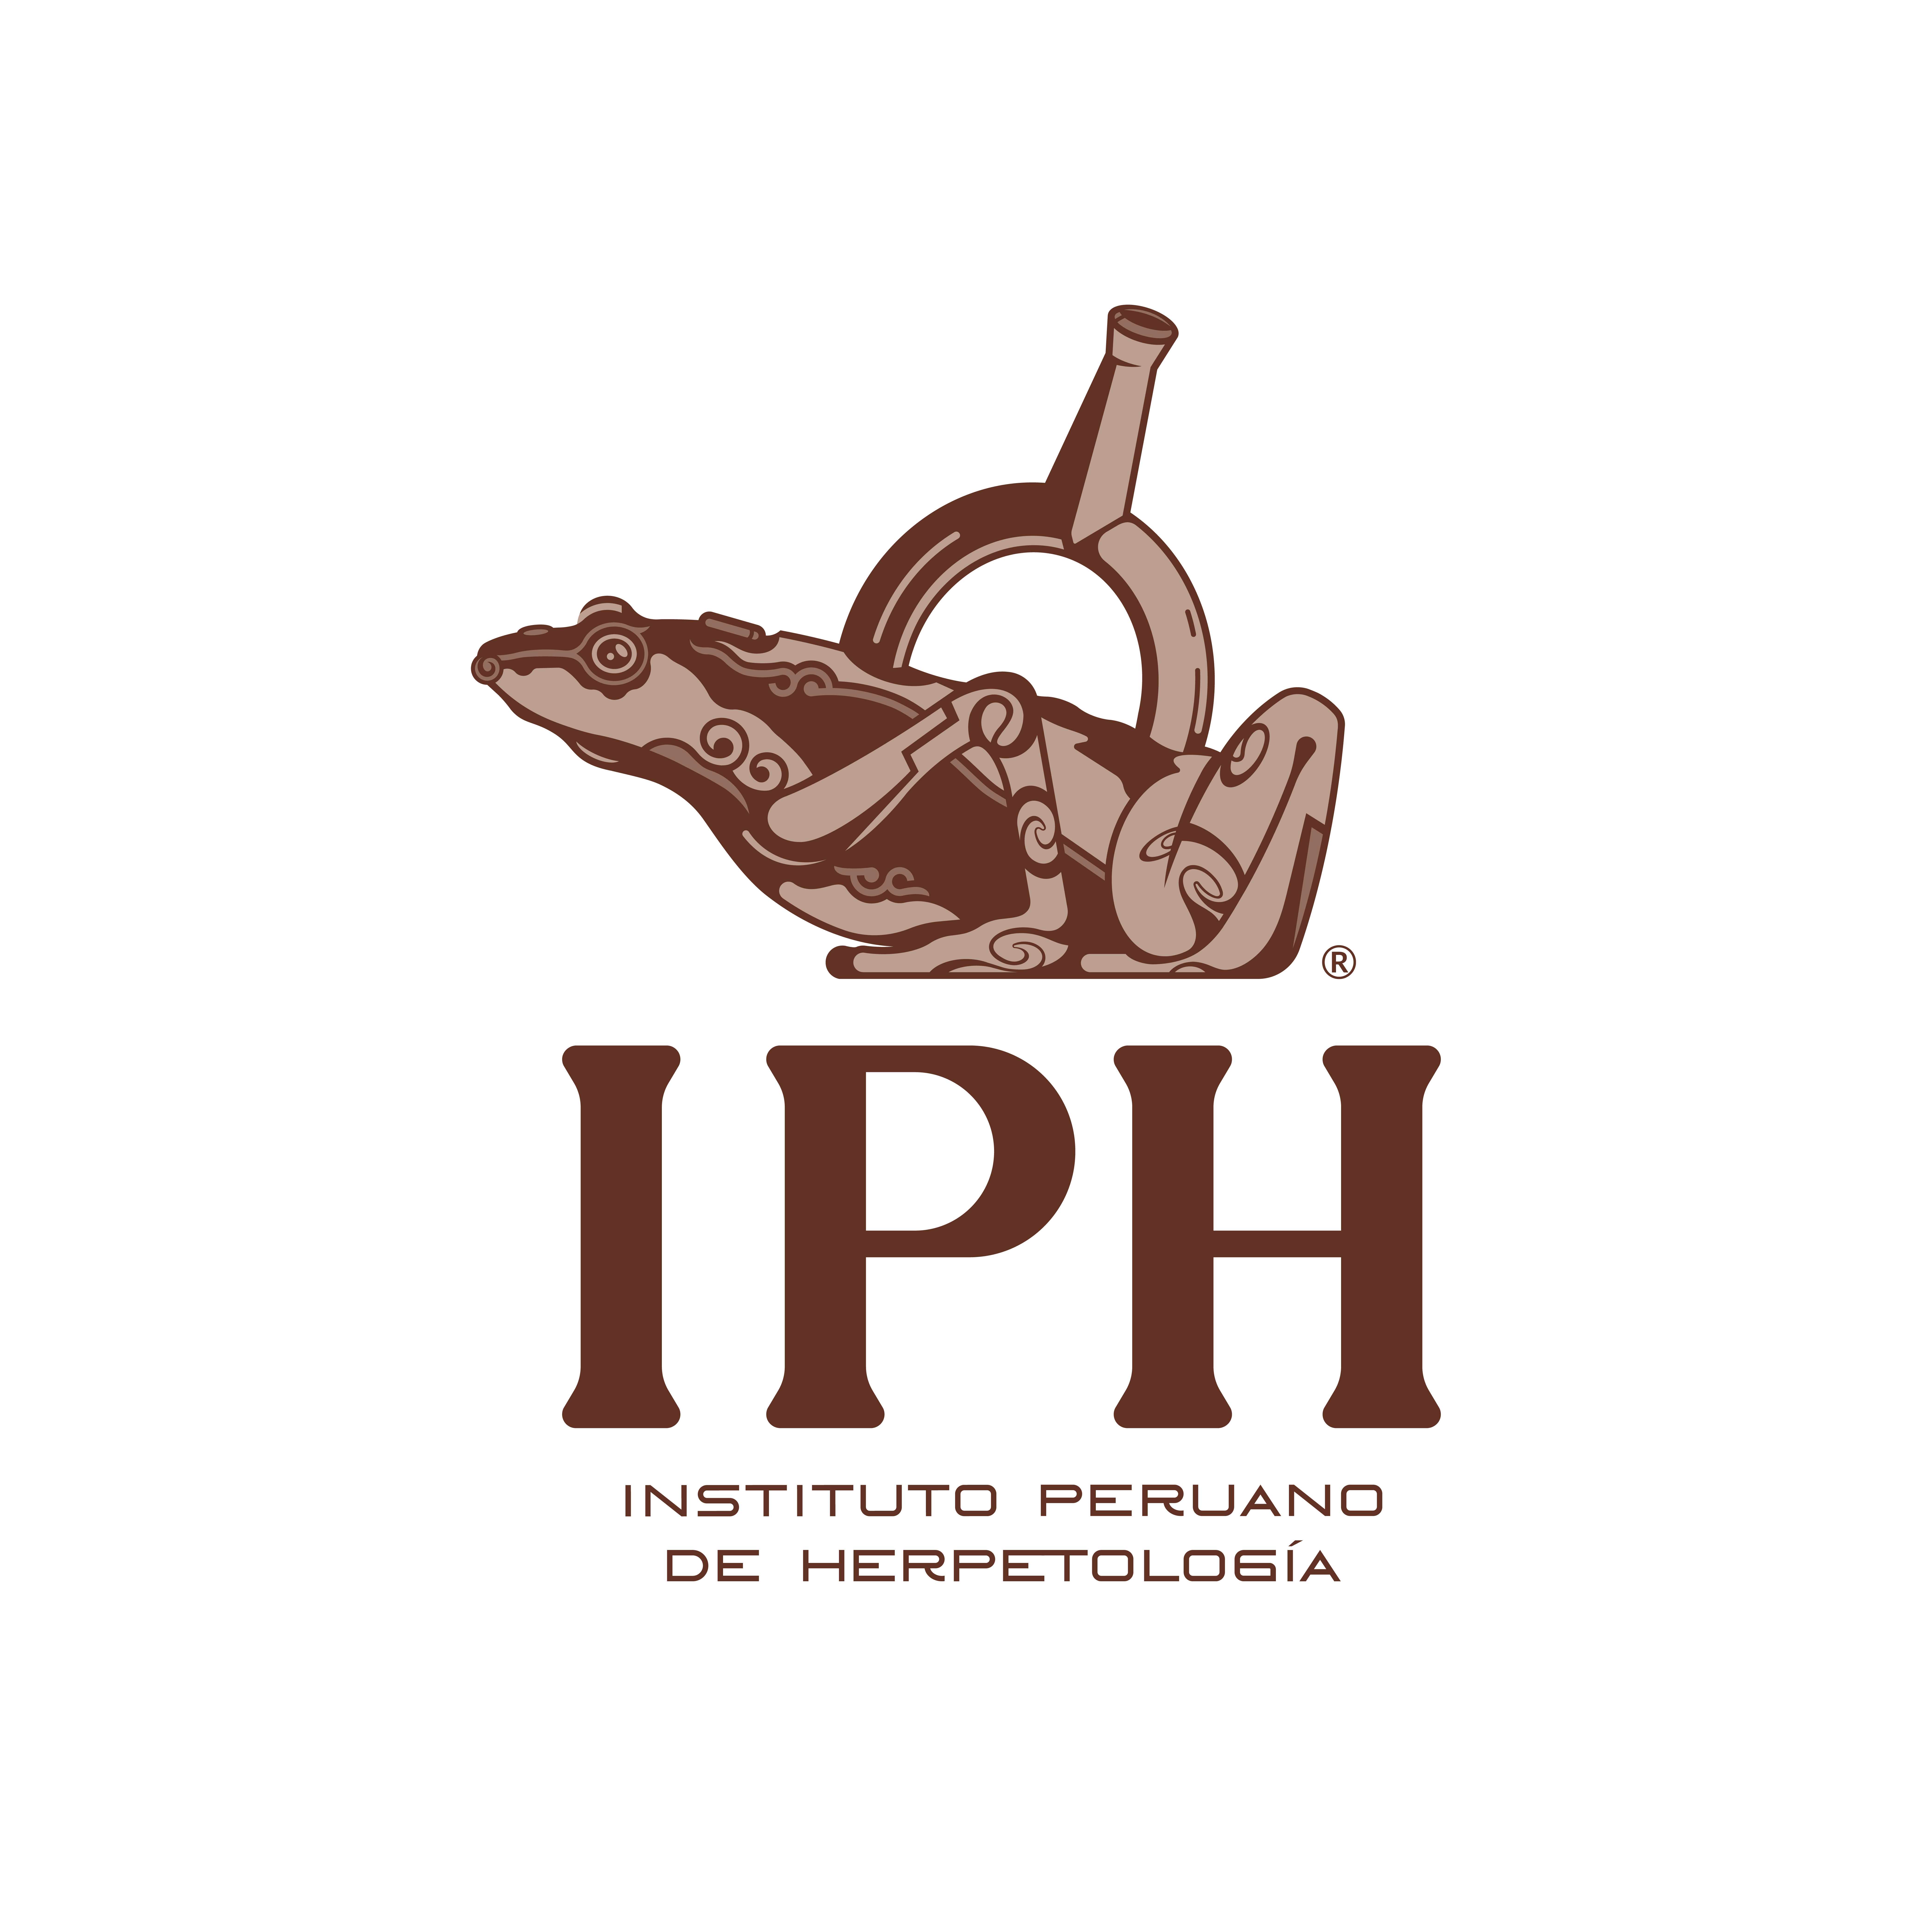 Instituto Peruano de Herpetologia